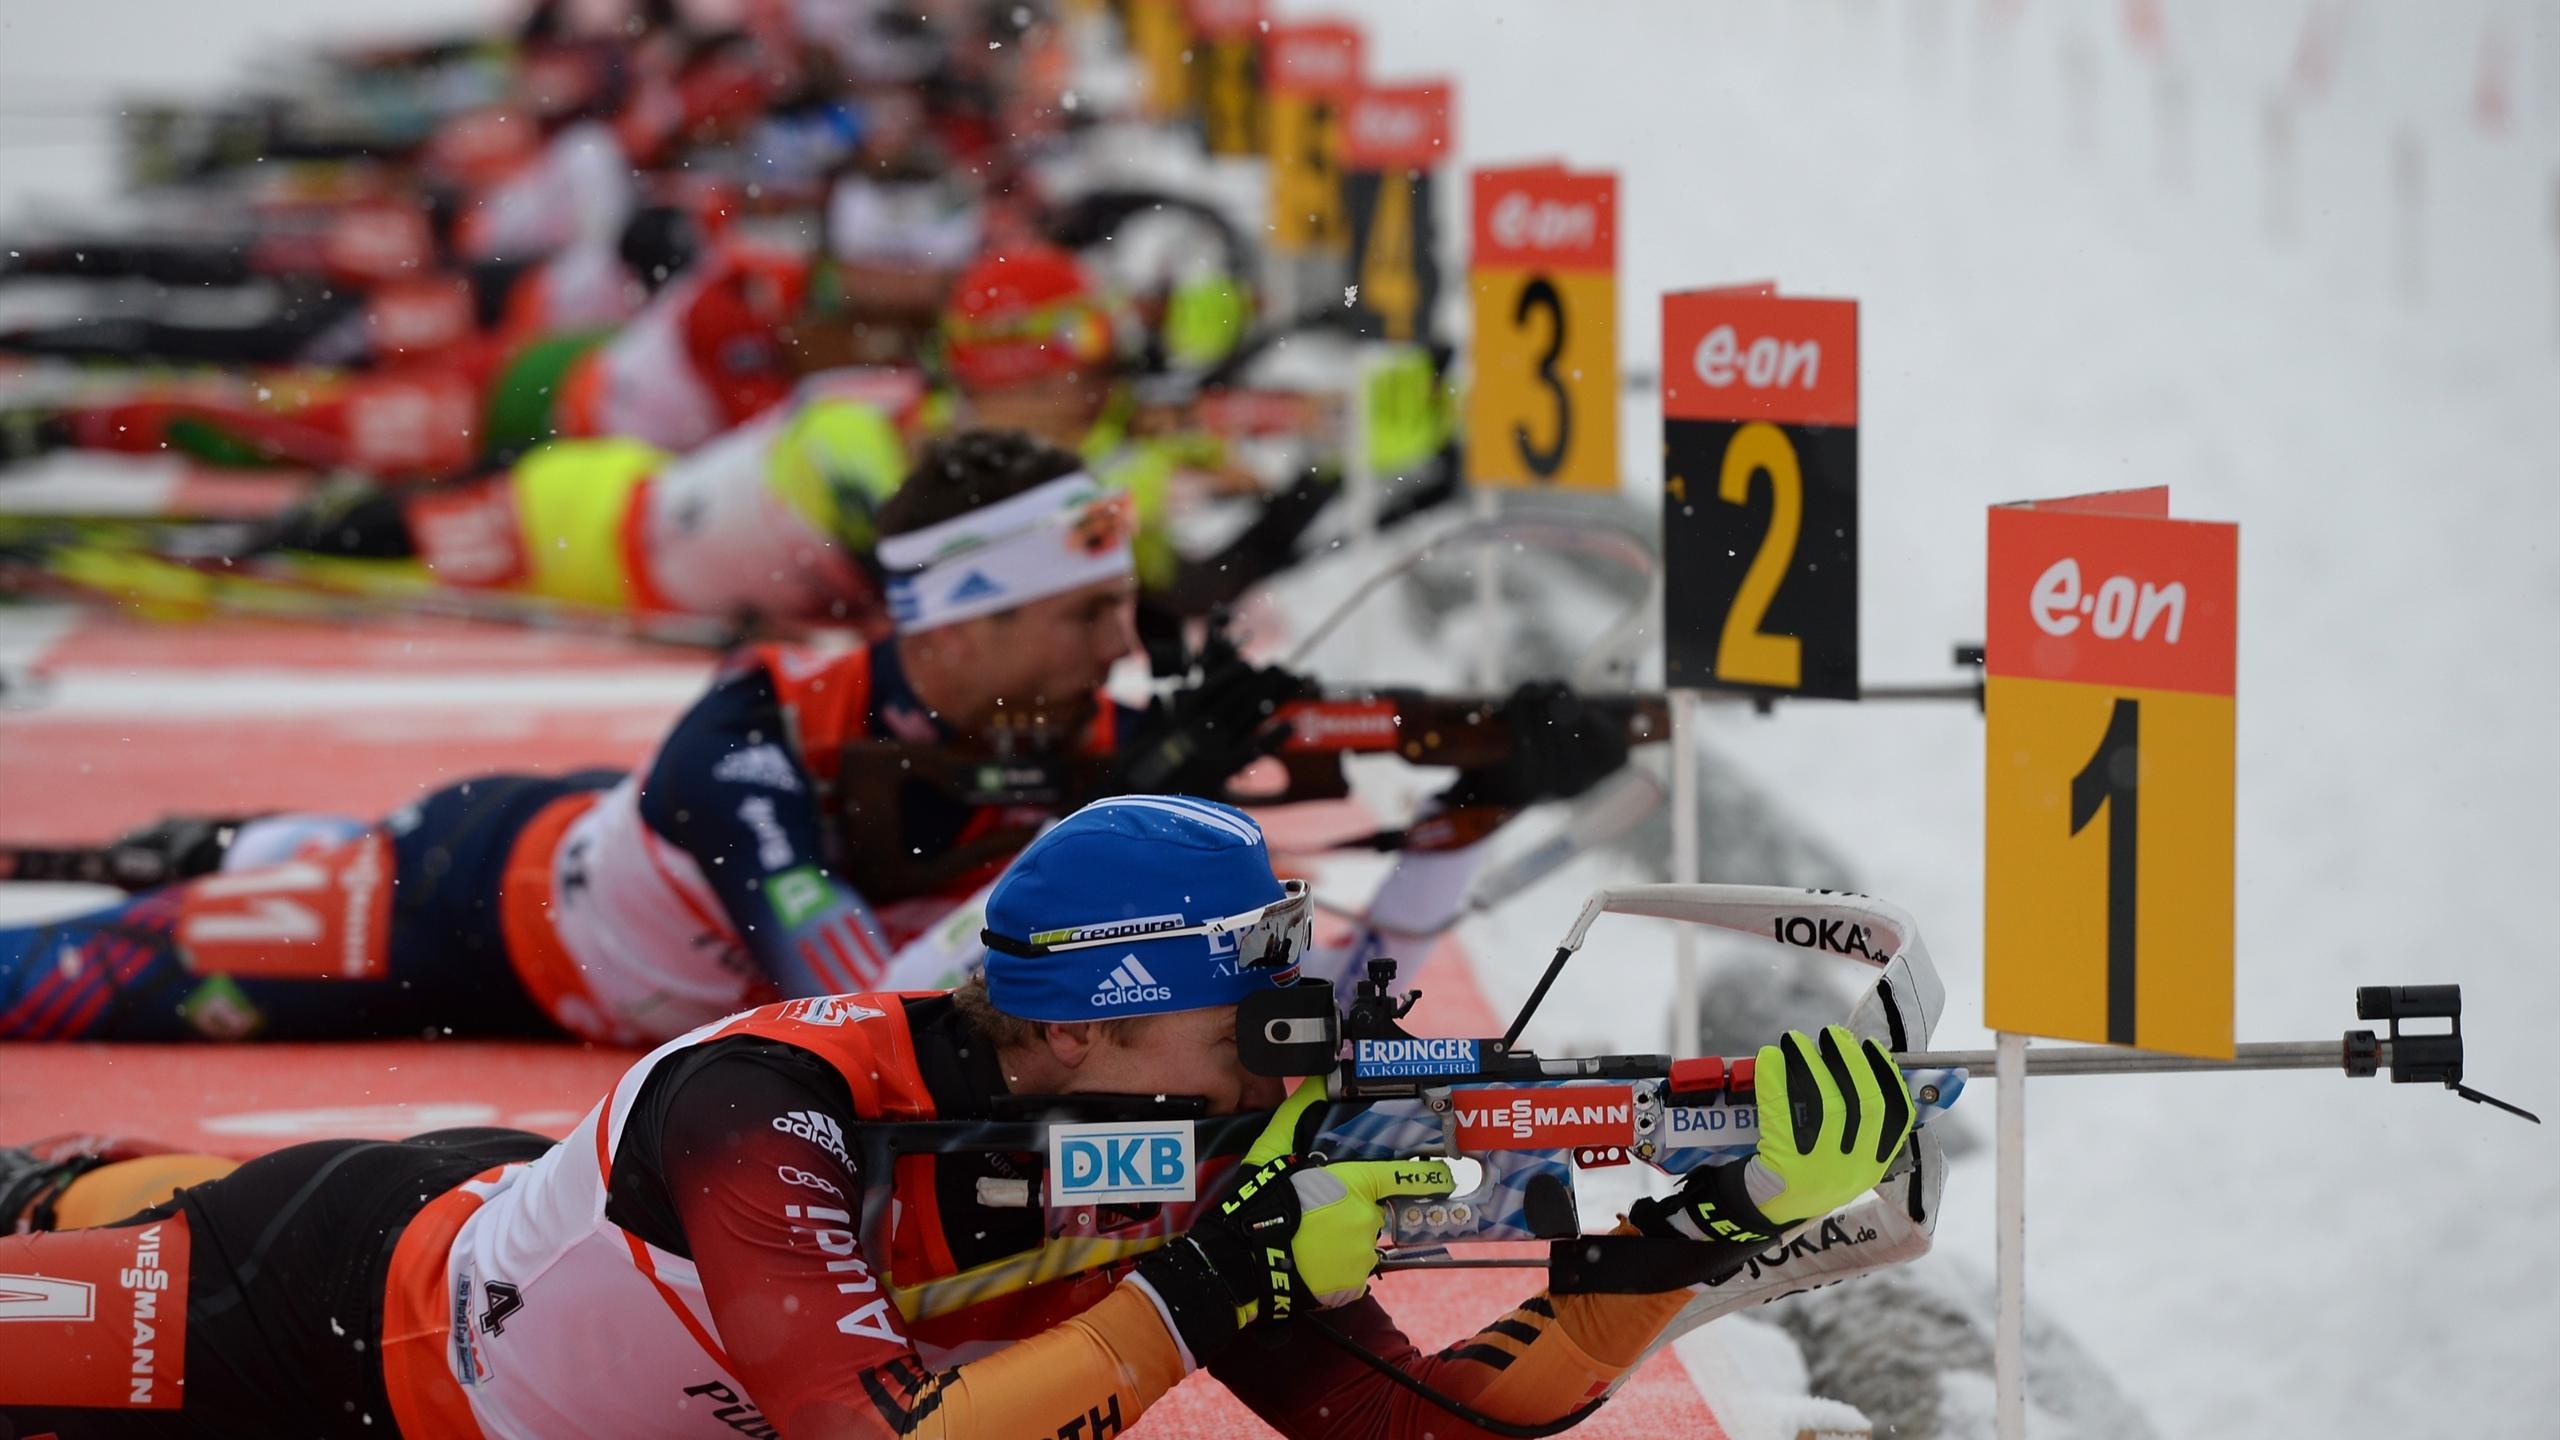 Biathlon: Competitions, Norway, Oslo, A mass start, Firing sequences, Five targets. 2560x1440 HD Wallpaper.